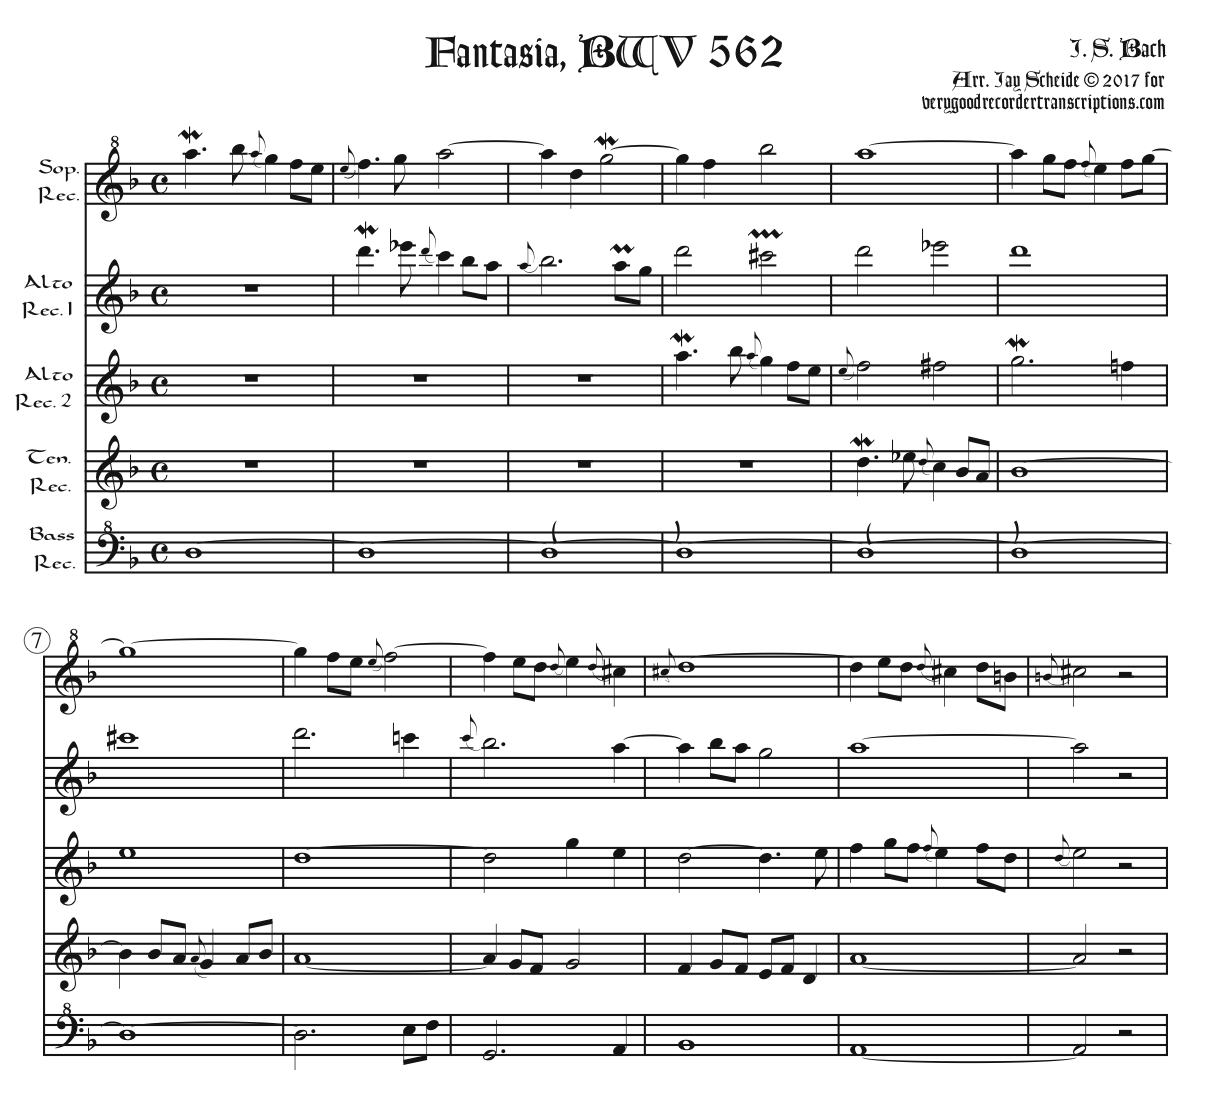 Fantasia BWV 562, arr. for recorder quintet